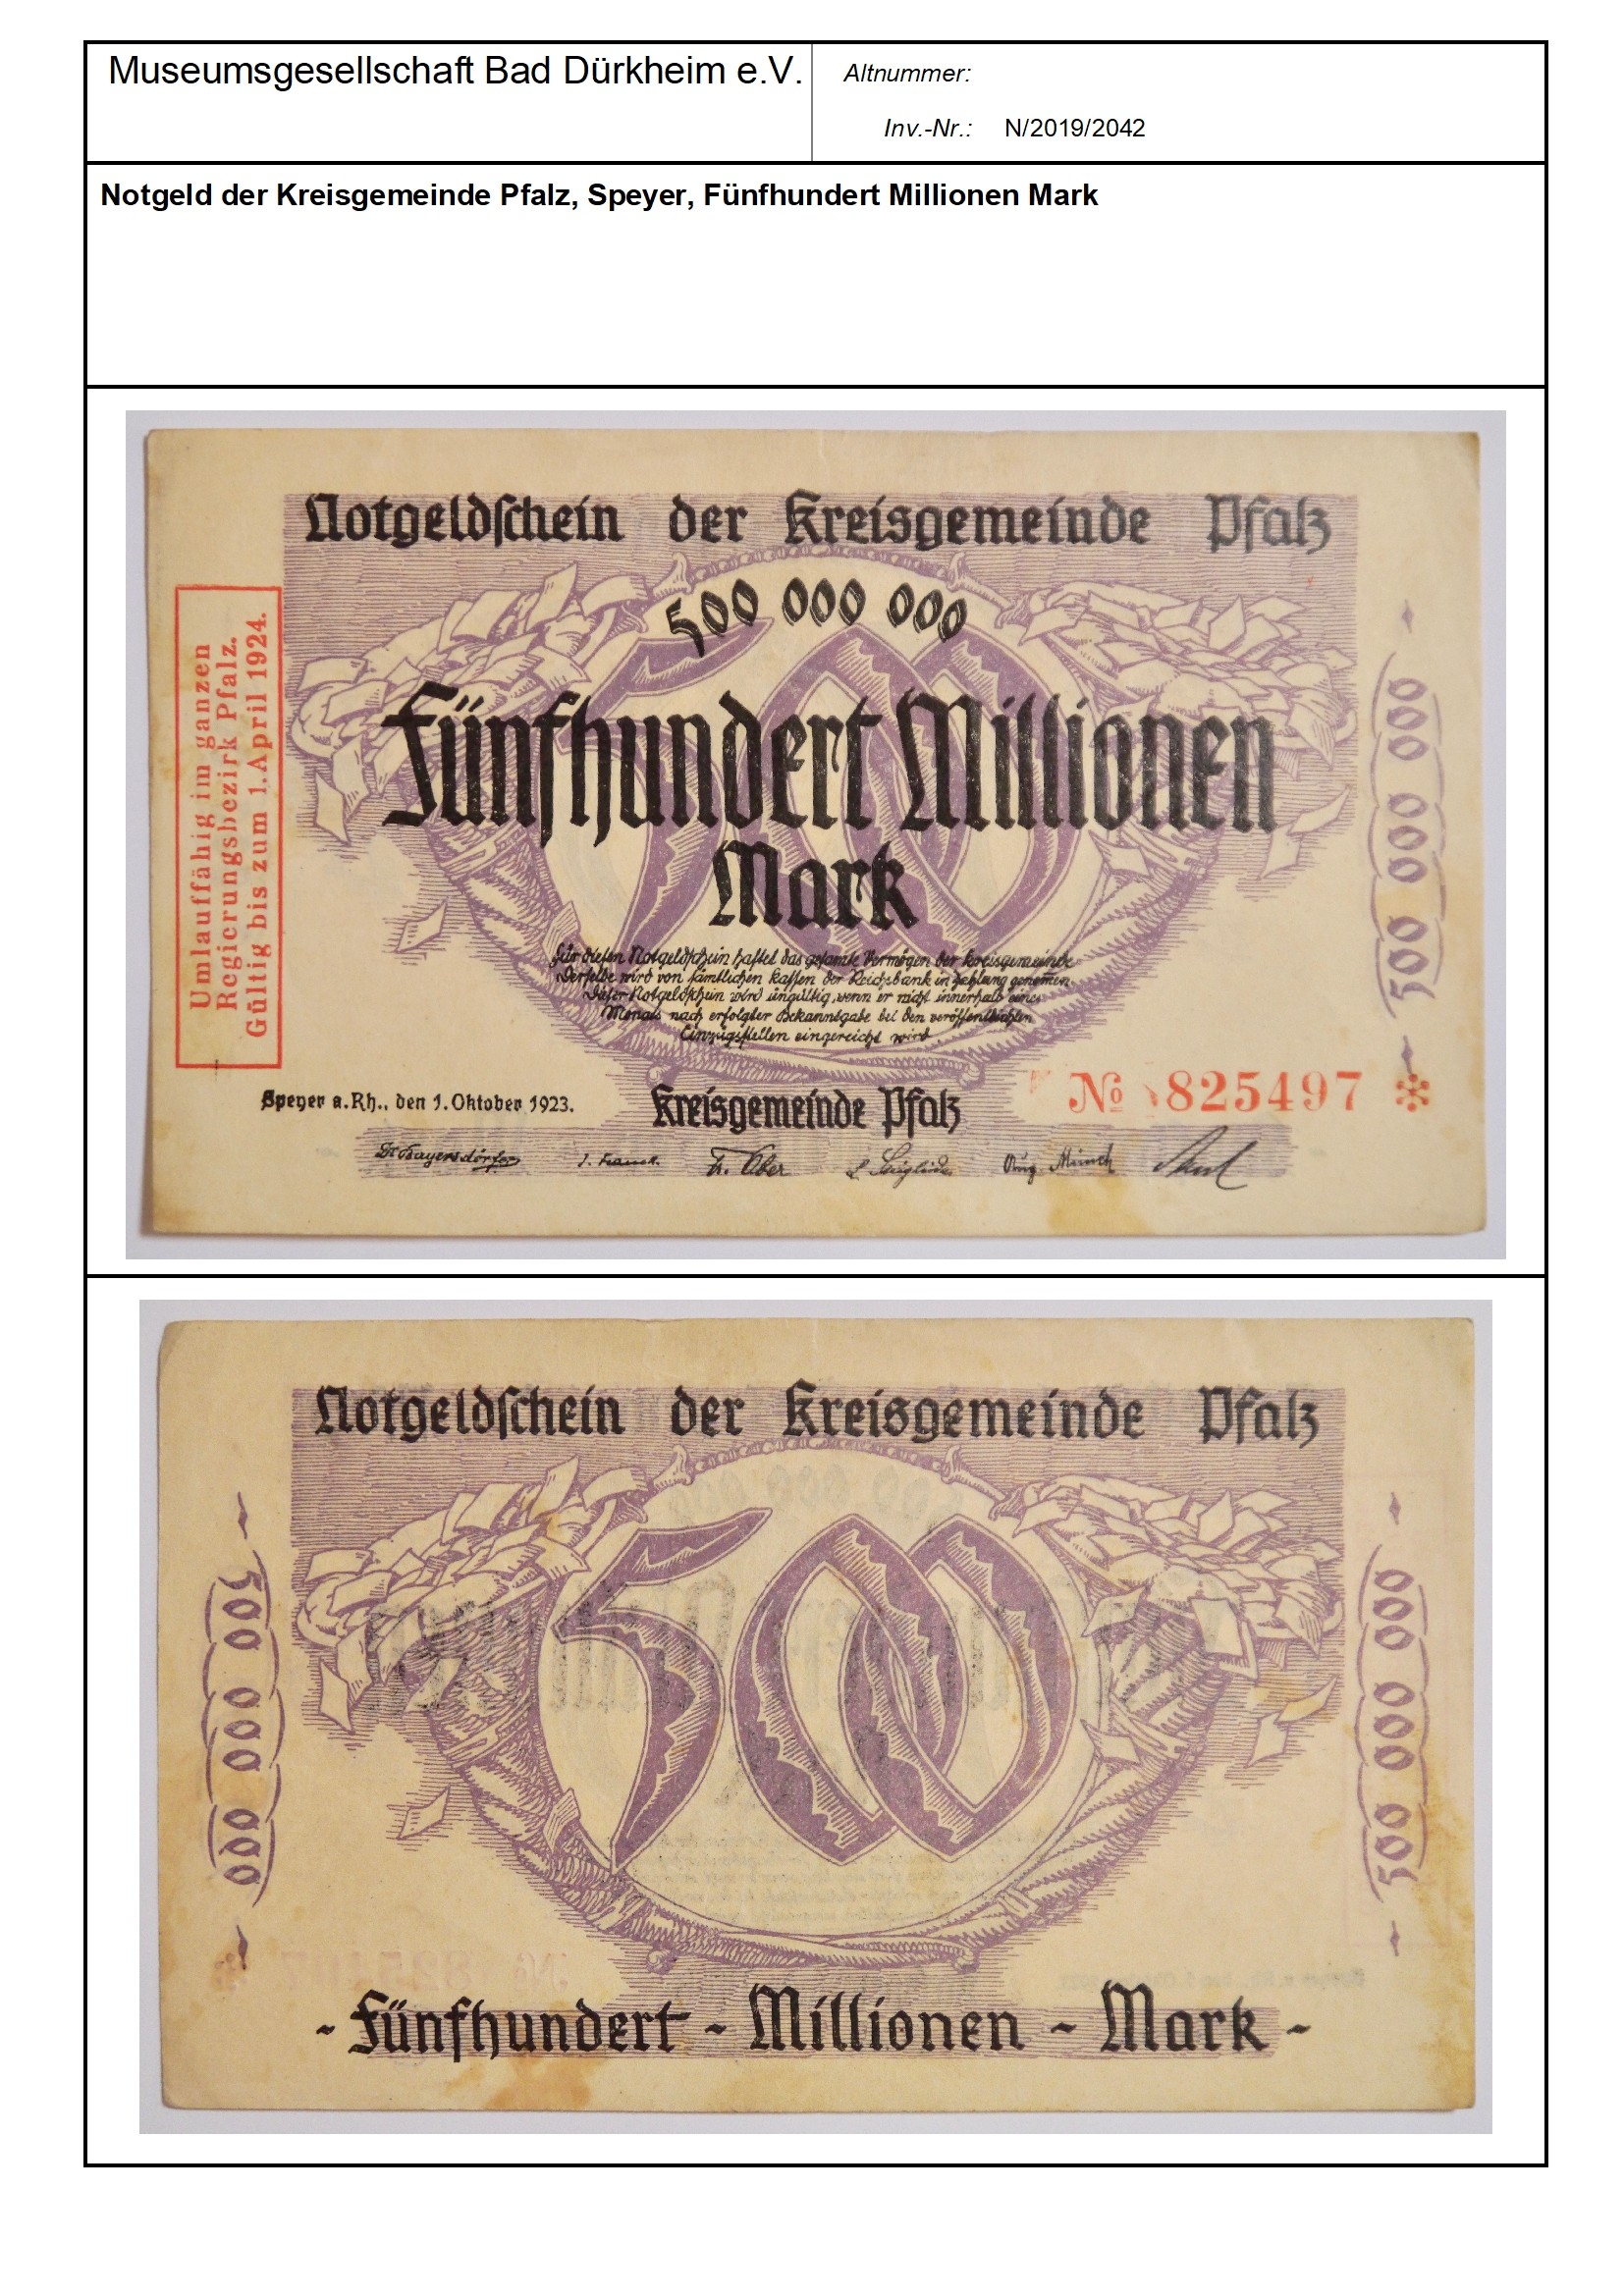 Notgeld der Kreisgemeinde Pfalz, Speyer, Fünfhundert Millionen Mark
Serien-Nummer: NO 825497 (Museumsgesellschaft Bad Dürkheim e.V. CC BY-NC-SA)